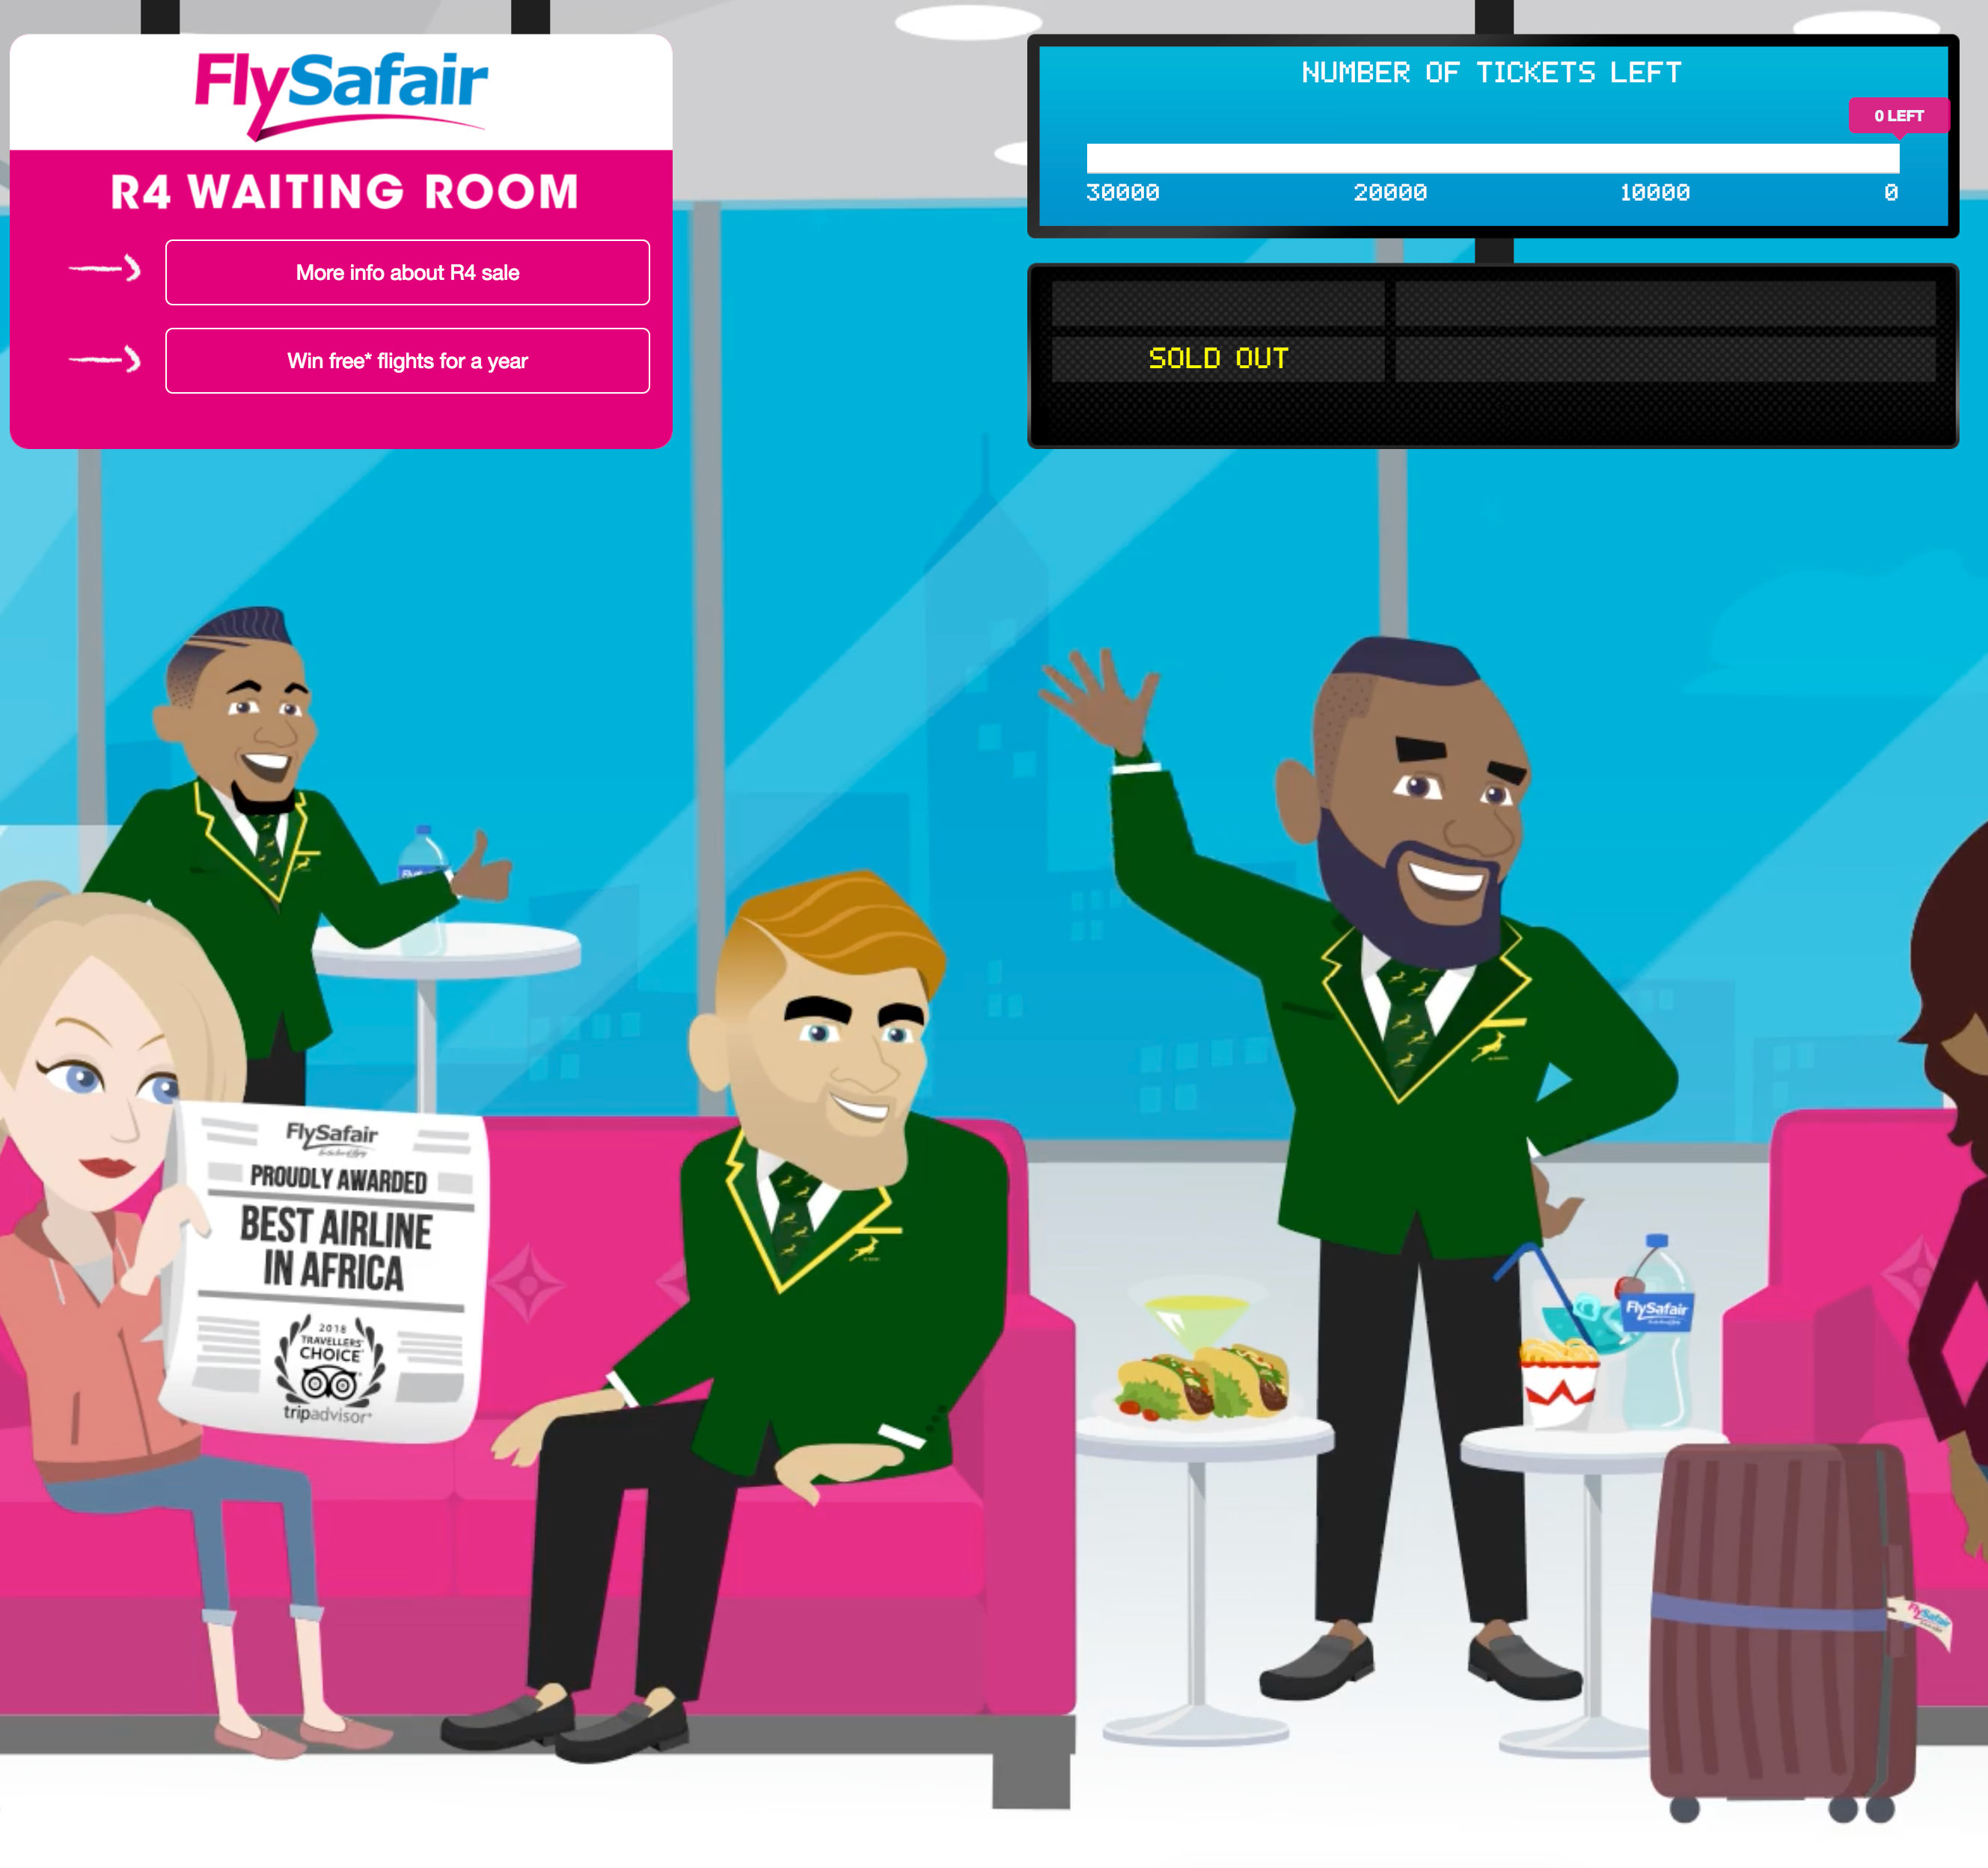 Desktop View of the FlySafair promotion